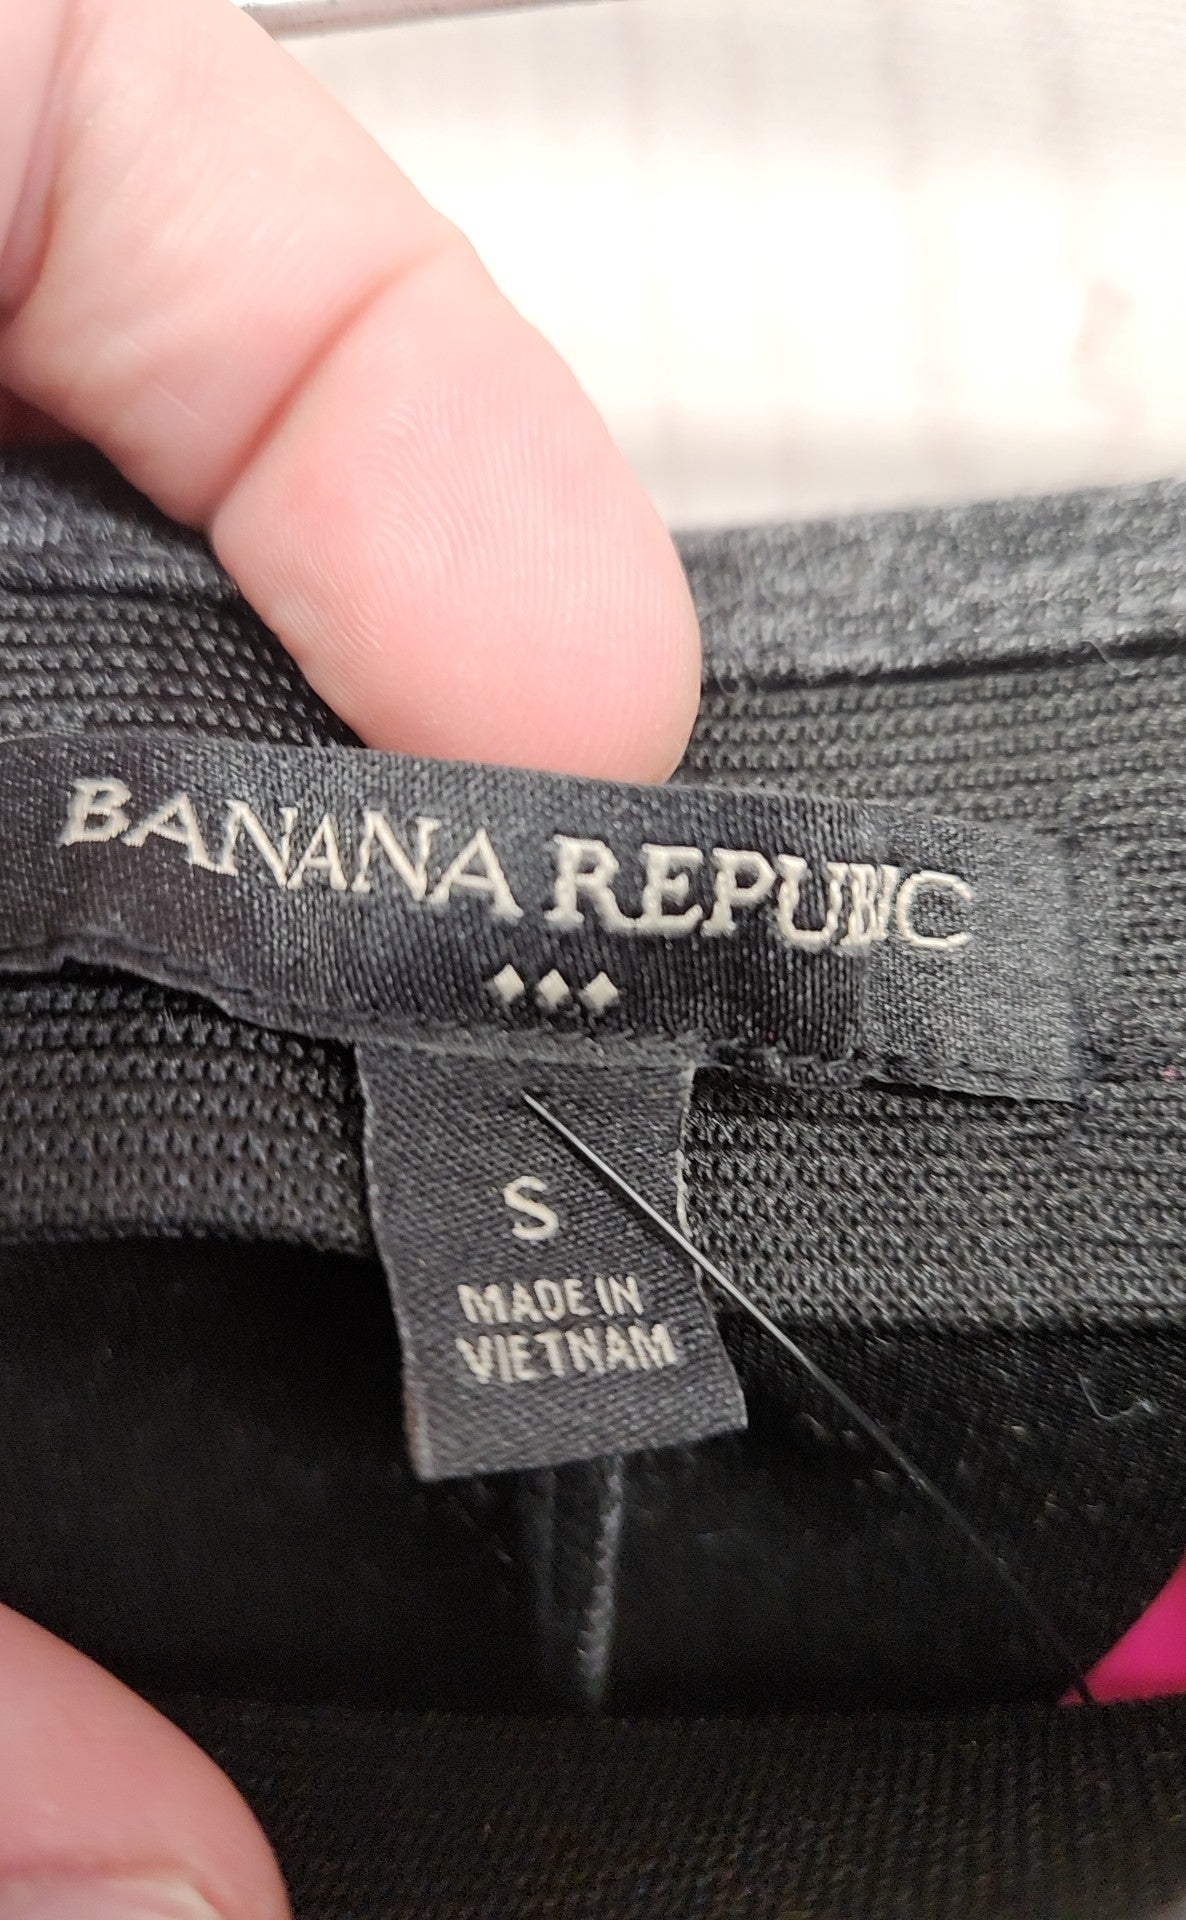 Banana Republic Women's Size S Gray Skirt